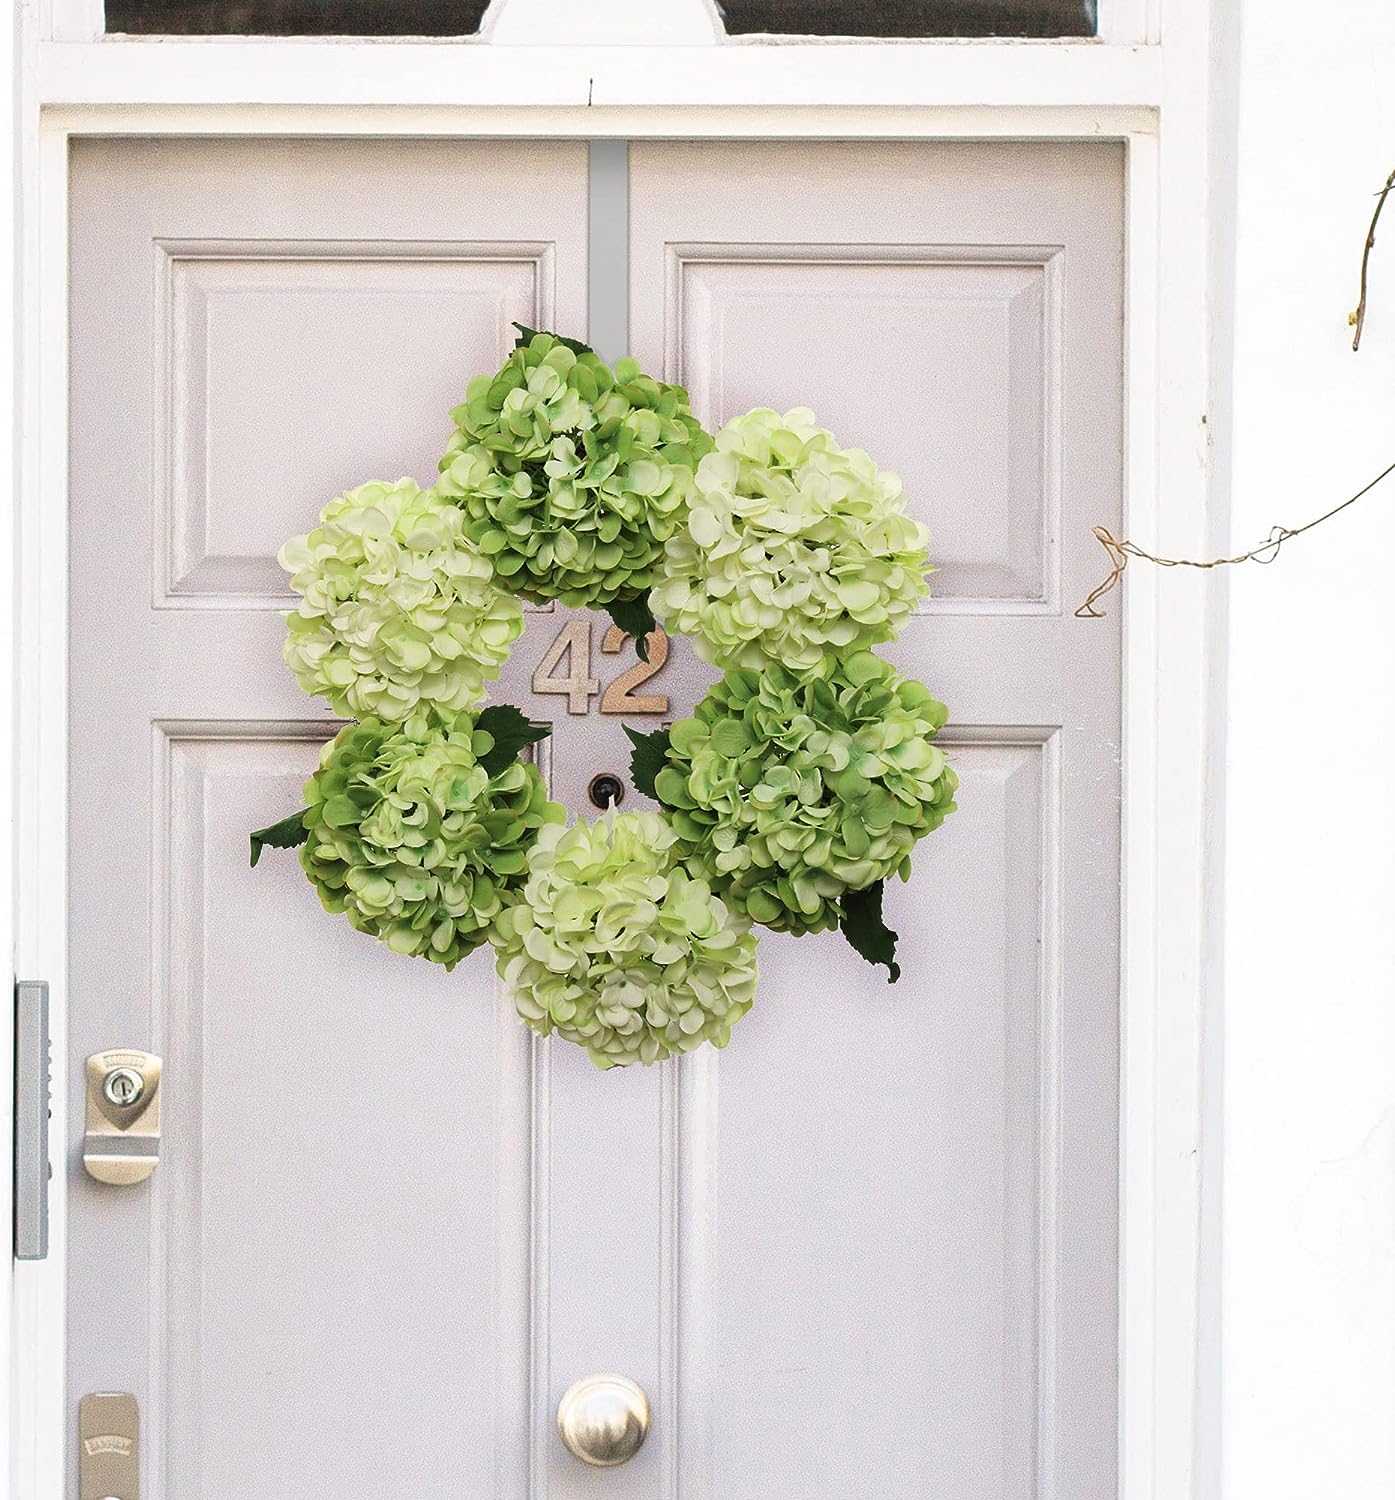 18" Handcrafted Mint & Green Hydrangea Wreath - Elegant Floral Decor for Home & Door